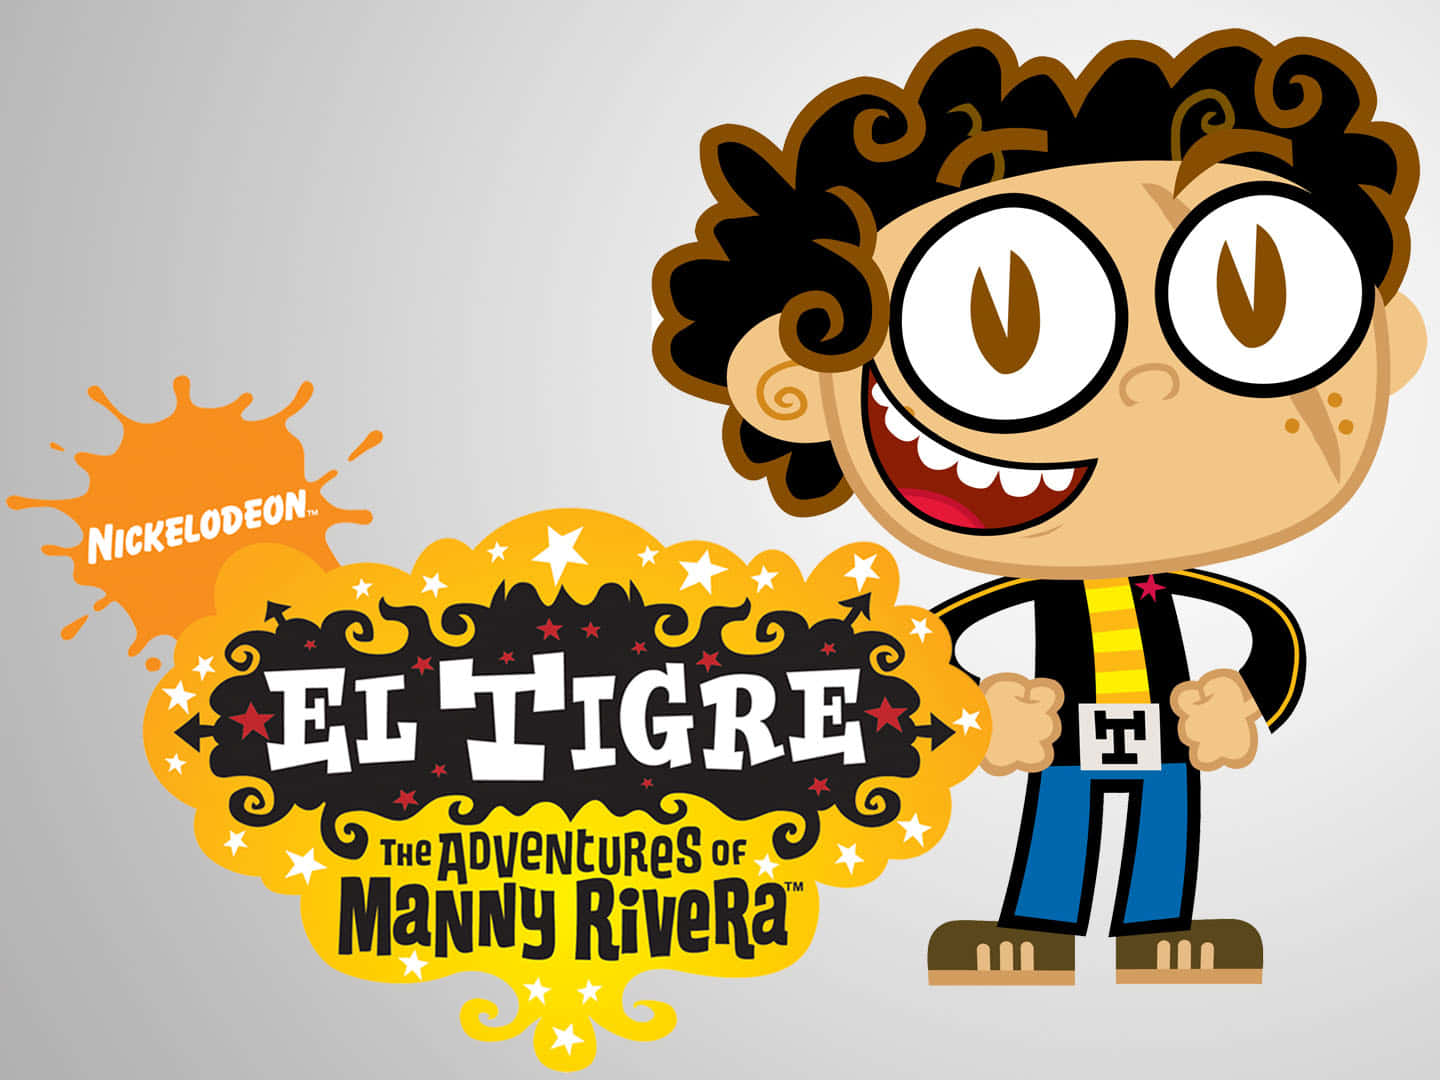 El tigre the adventures of manny rivera dvd